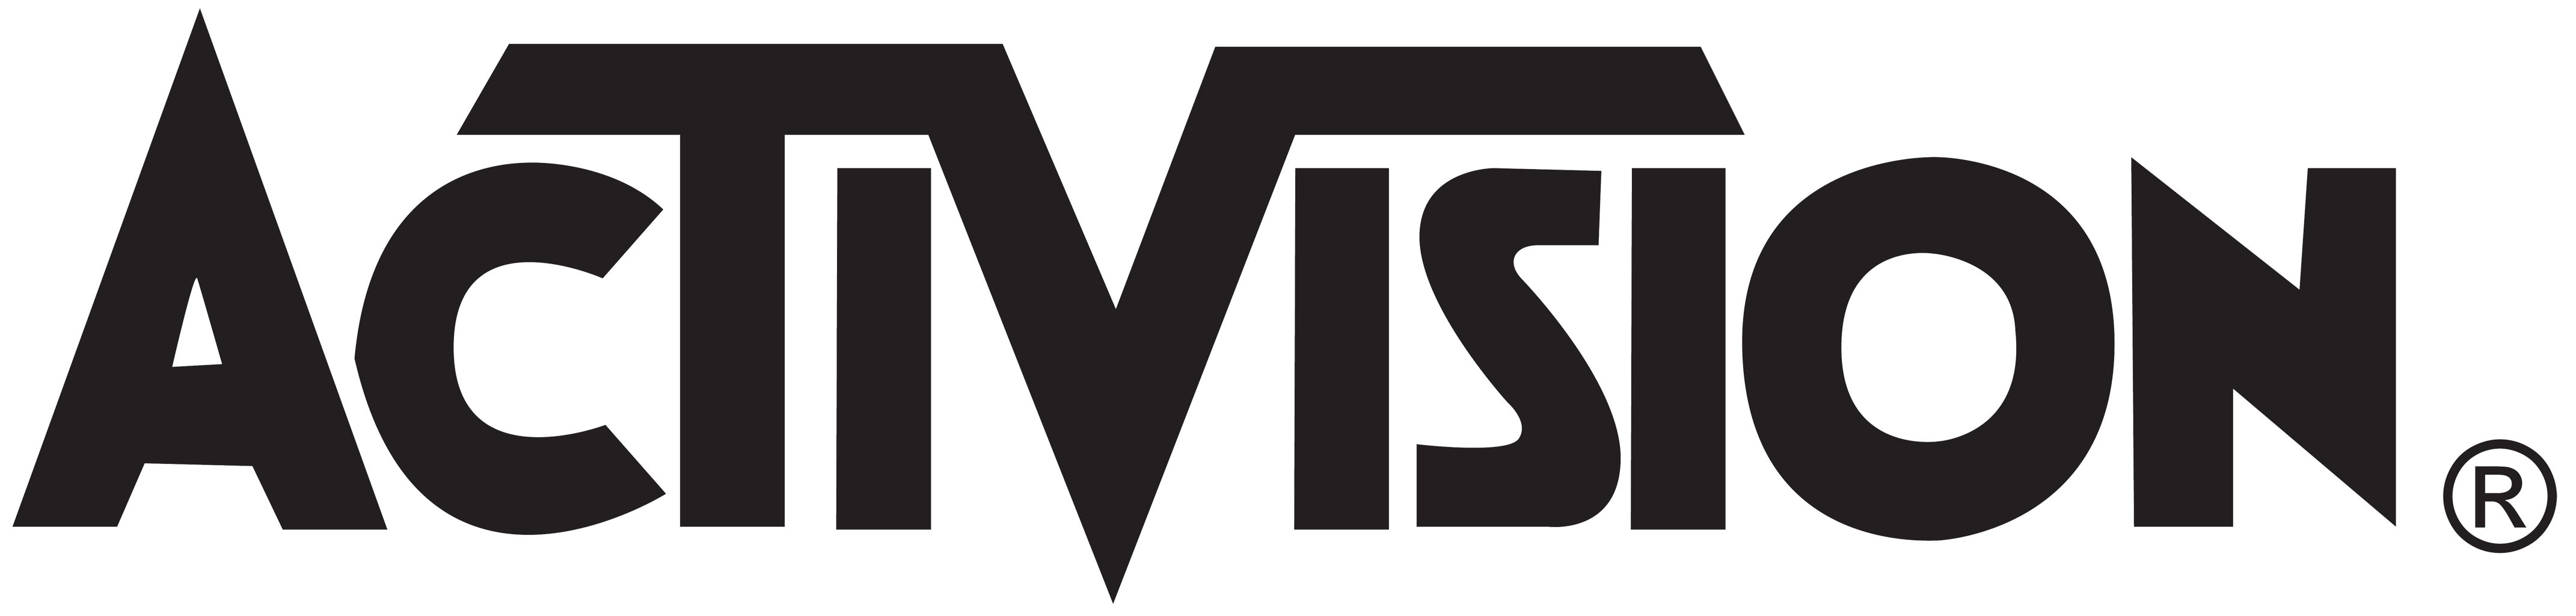 Activision Logo